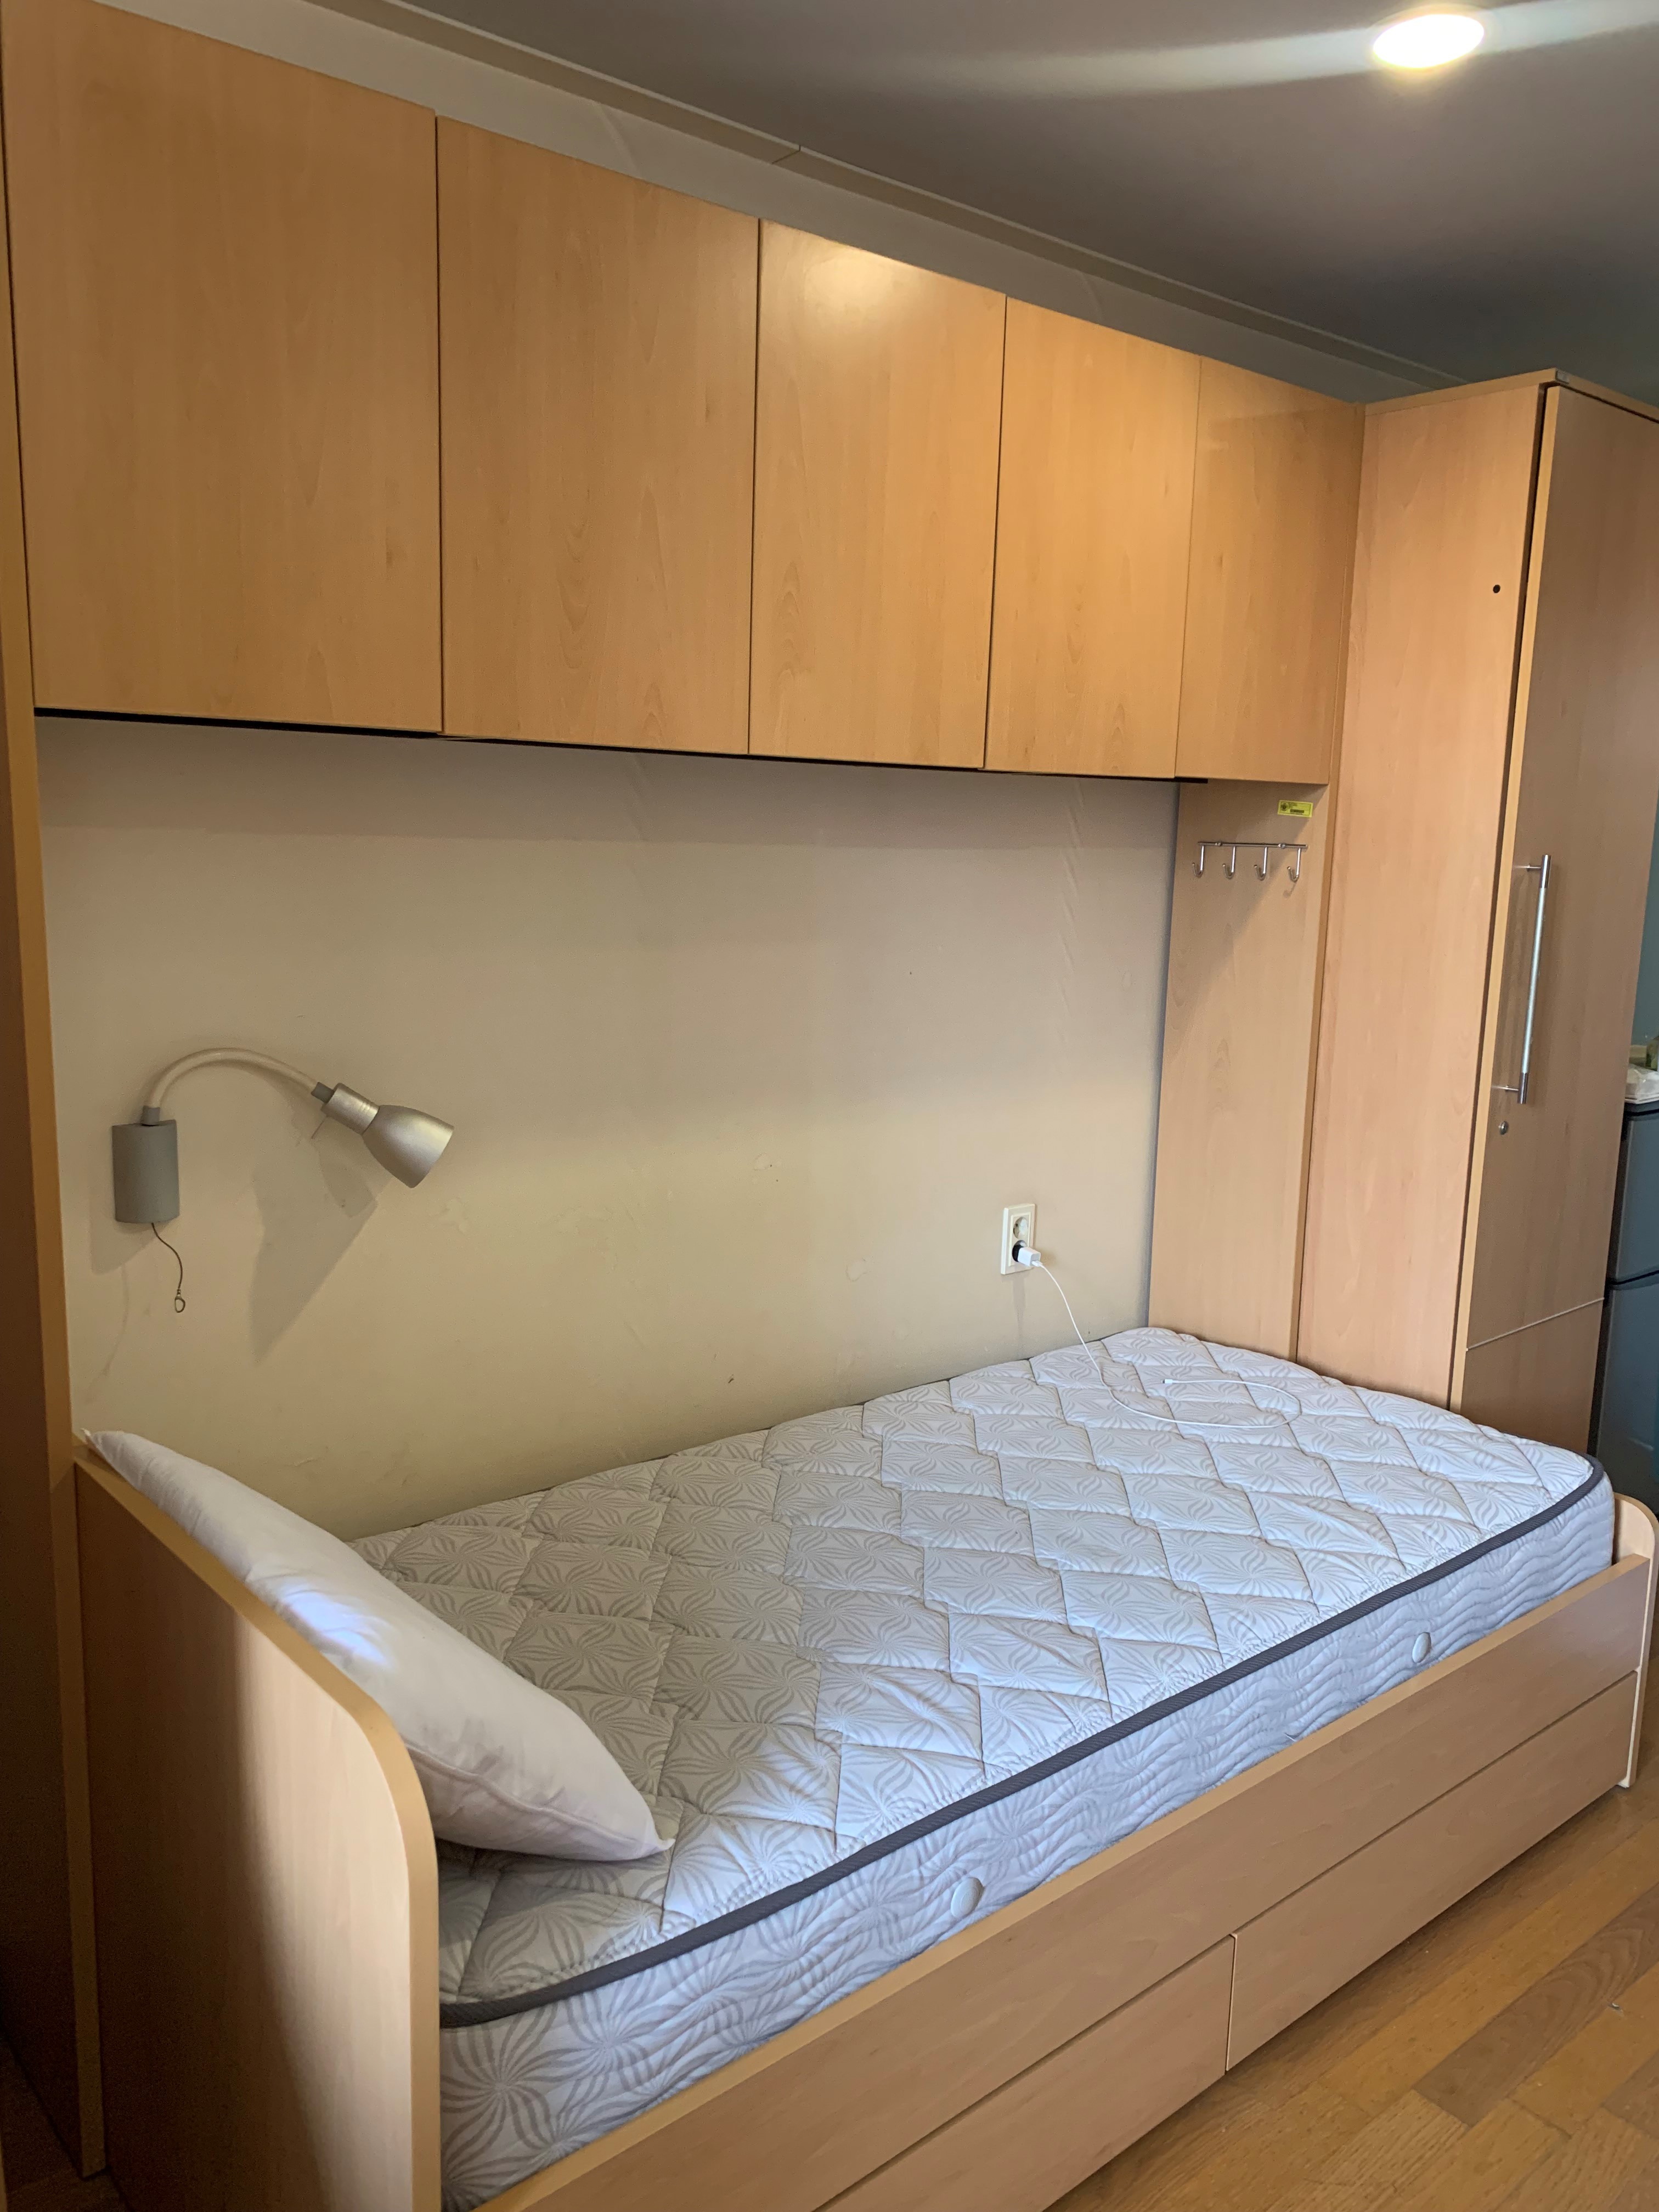 Picture of bedroom setup in dorm